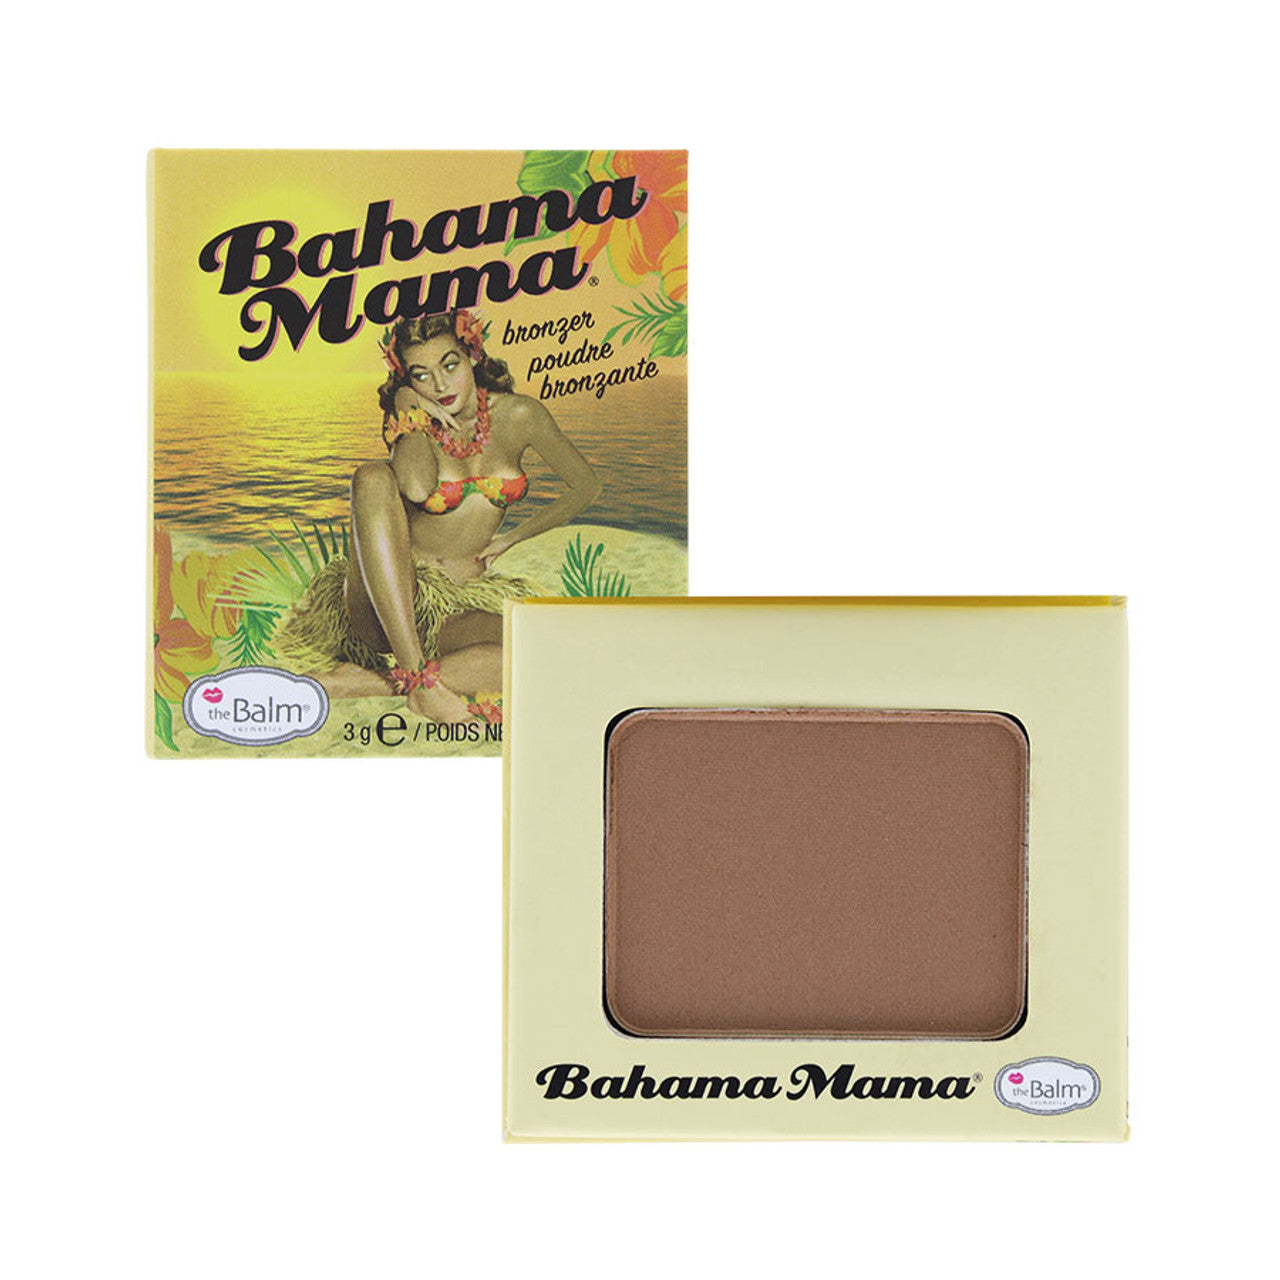 Buy The Balm Bahama Mama Bronzer - Travel Size in Pakistan